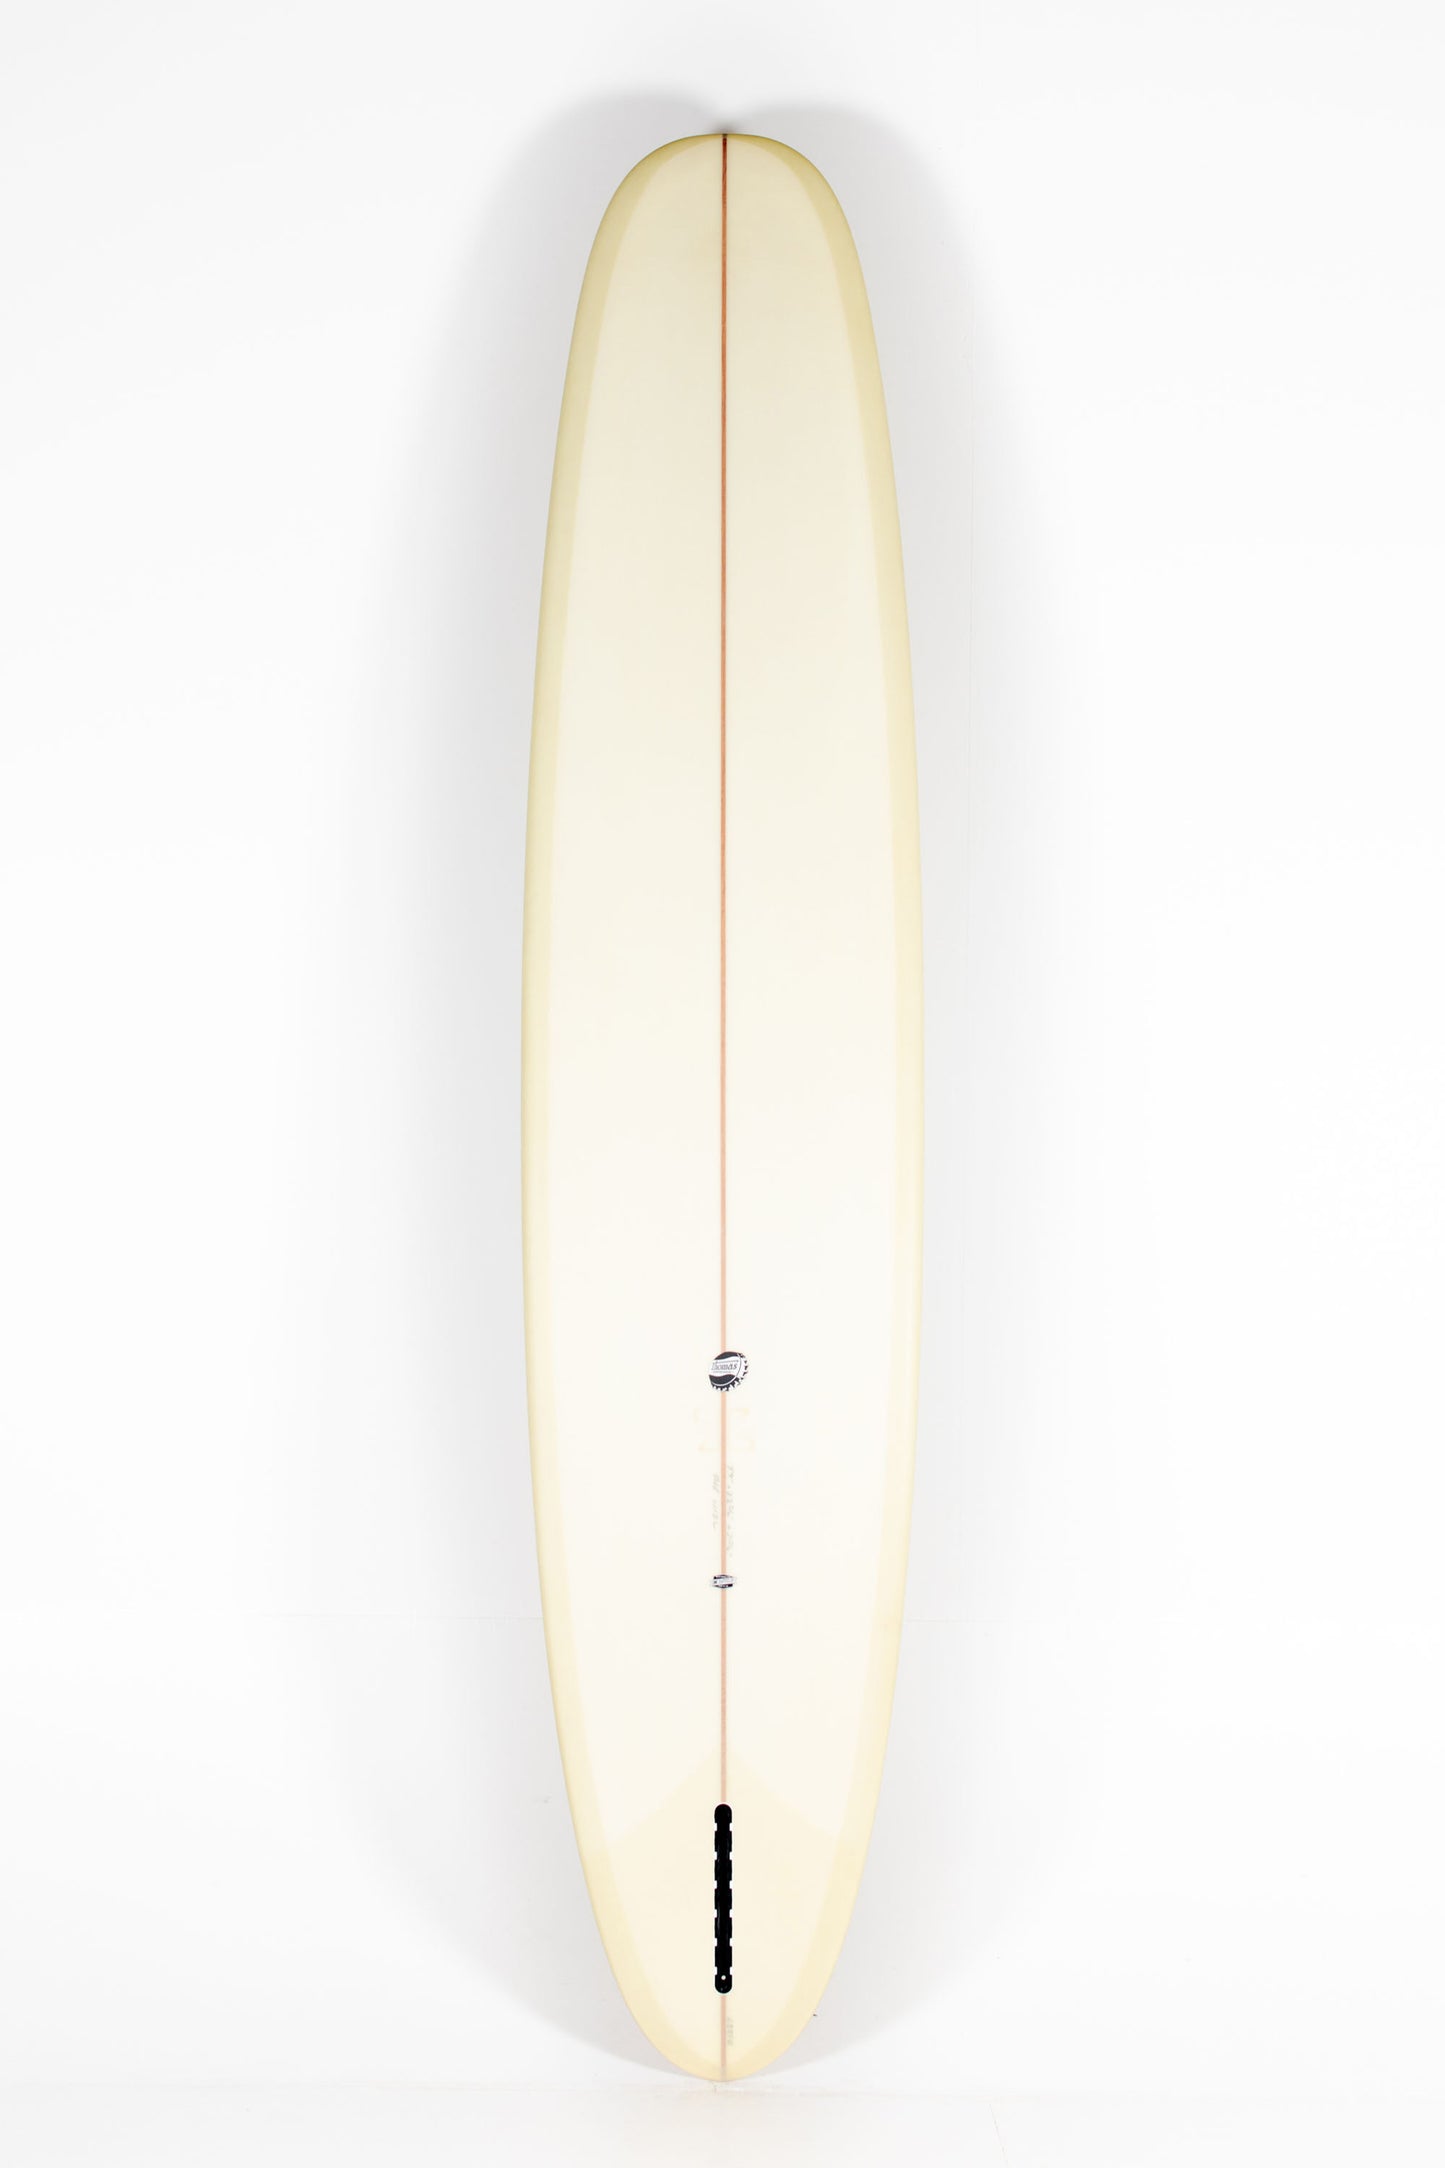 Pukas Surf shop - Thomas Surfboards - WIZL - 9'4"x22 3/4 x 2 3/4 - Ref. WIZL94